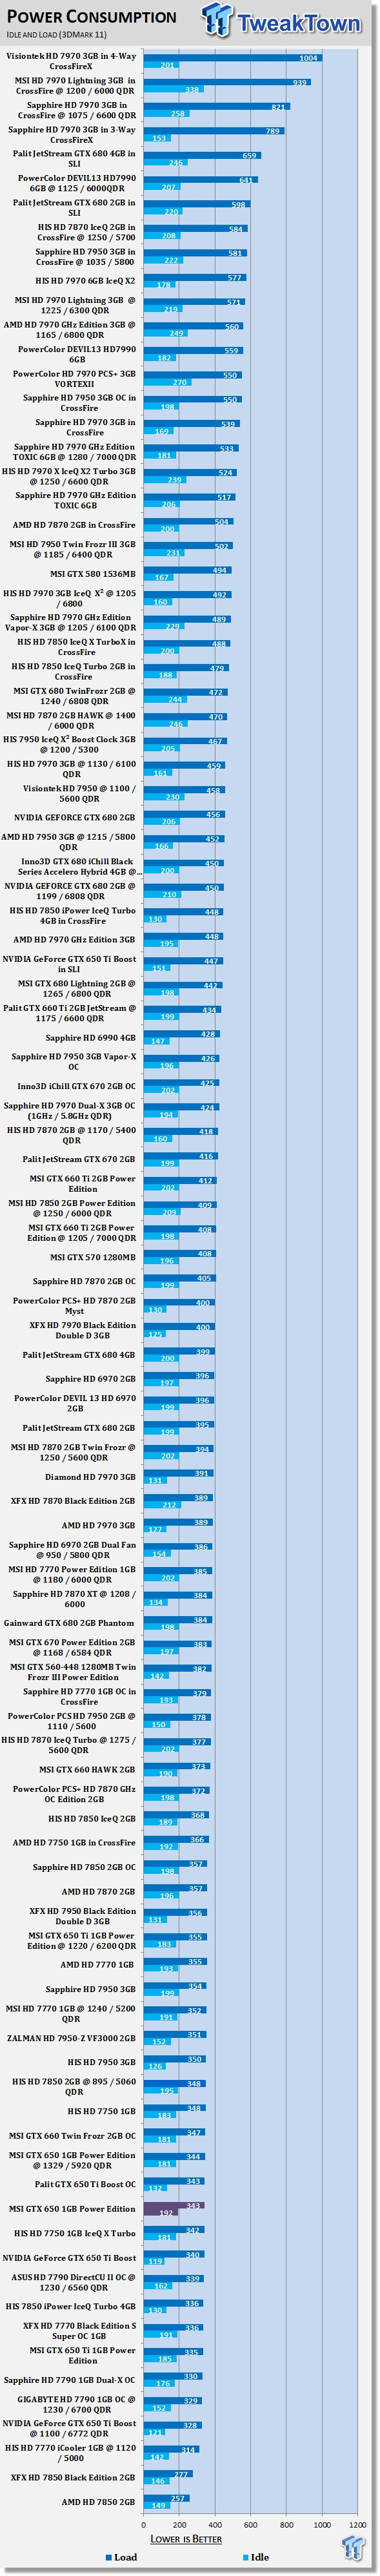 Palit Geforce Gtx 650 Ti Boost 2gb Oc Video Card Review Tweaktown